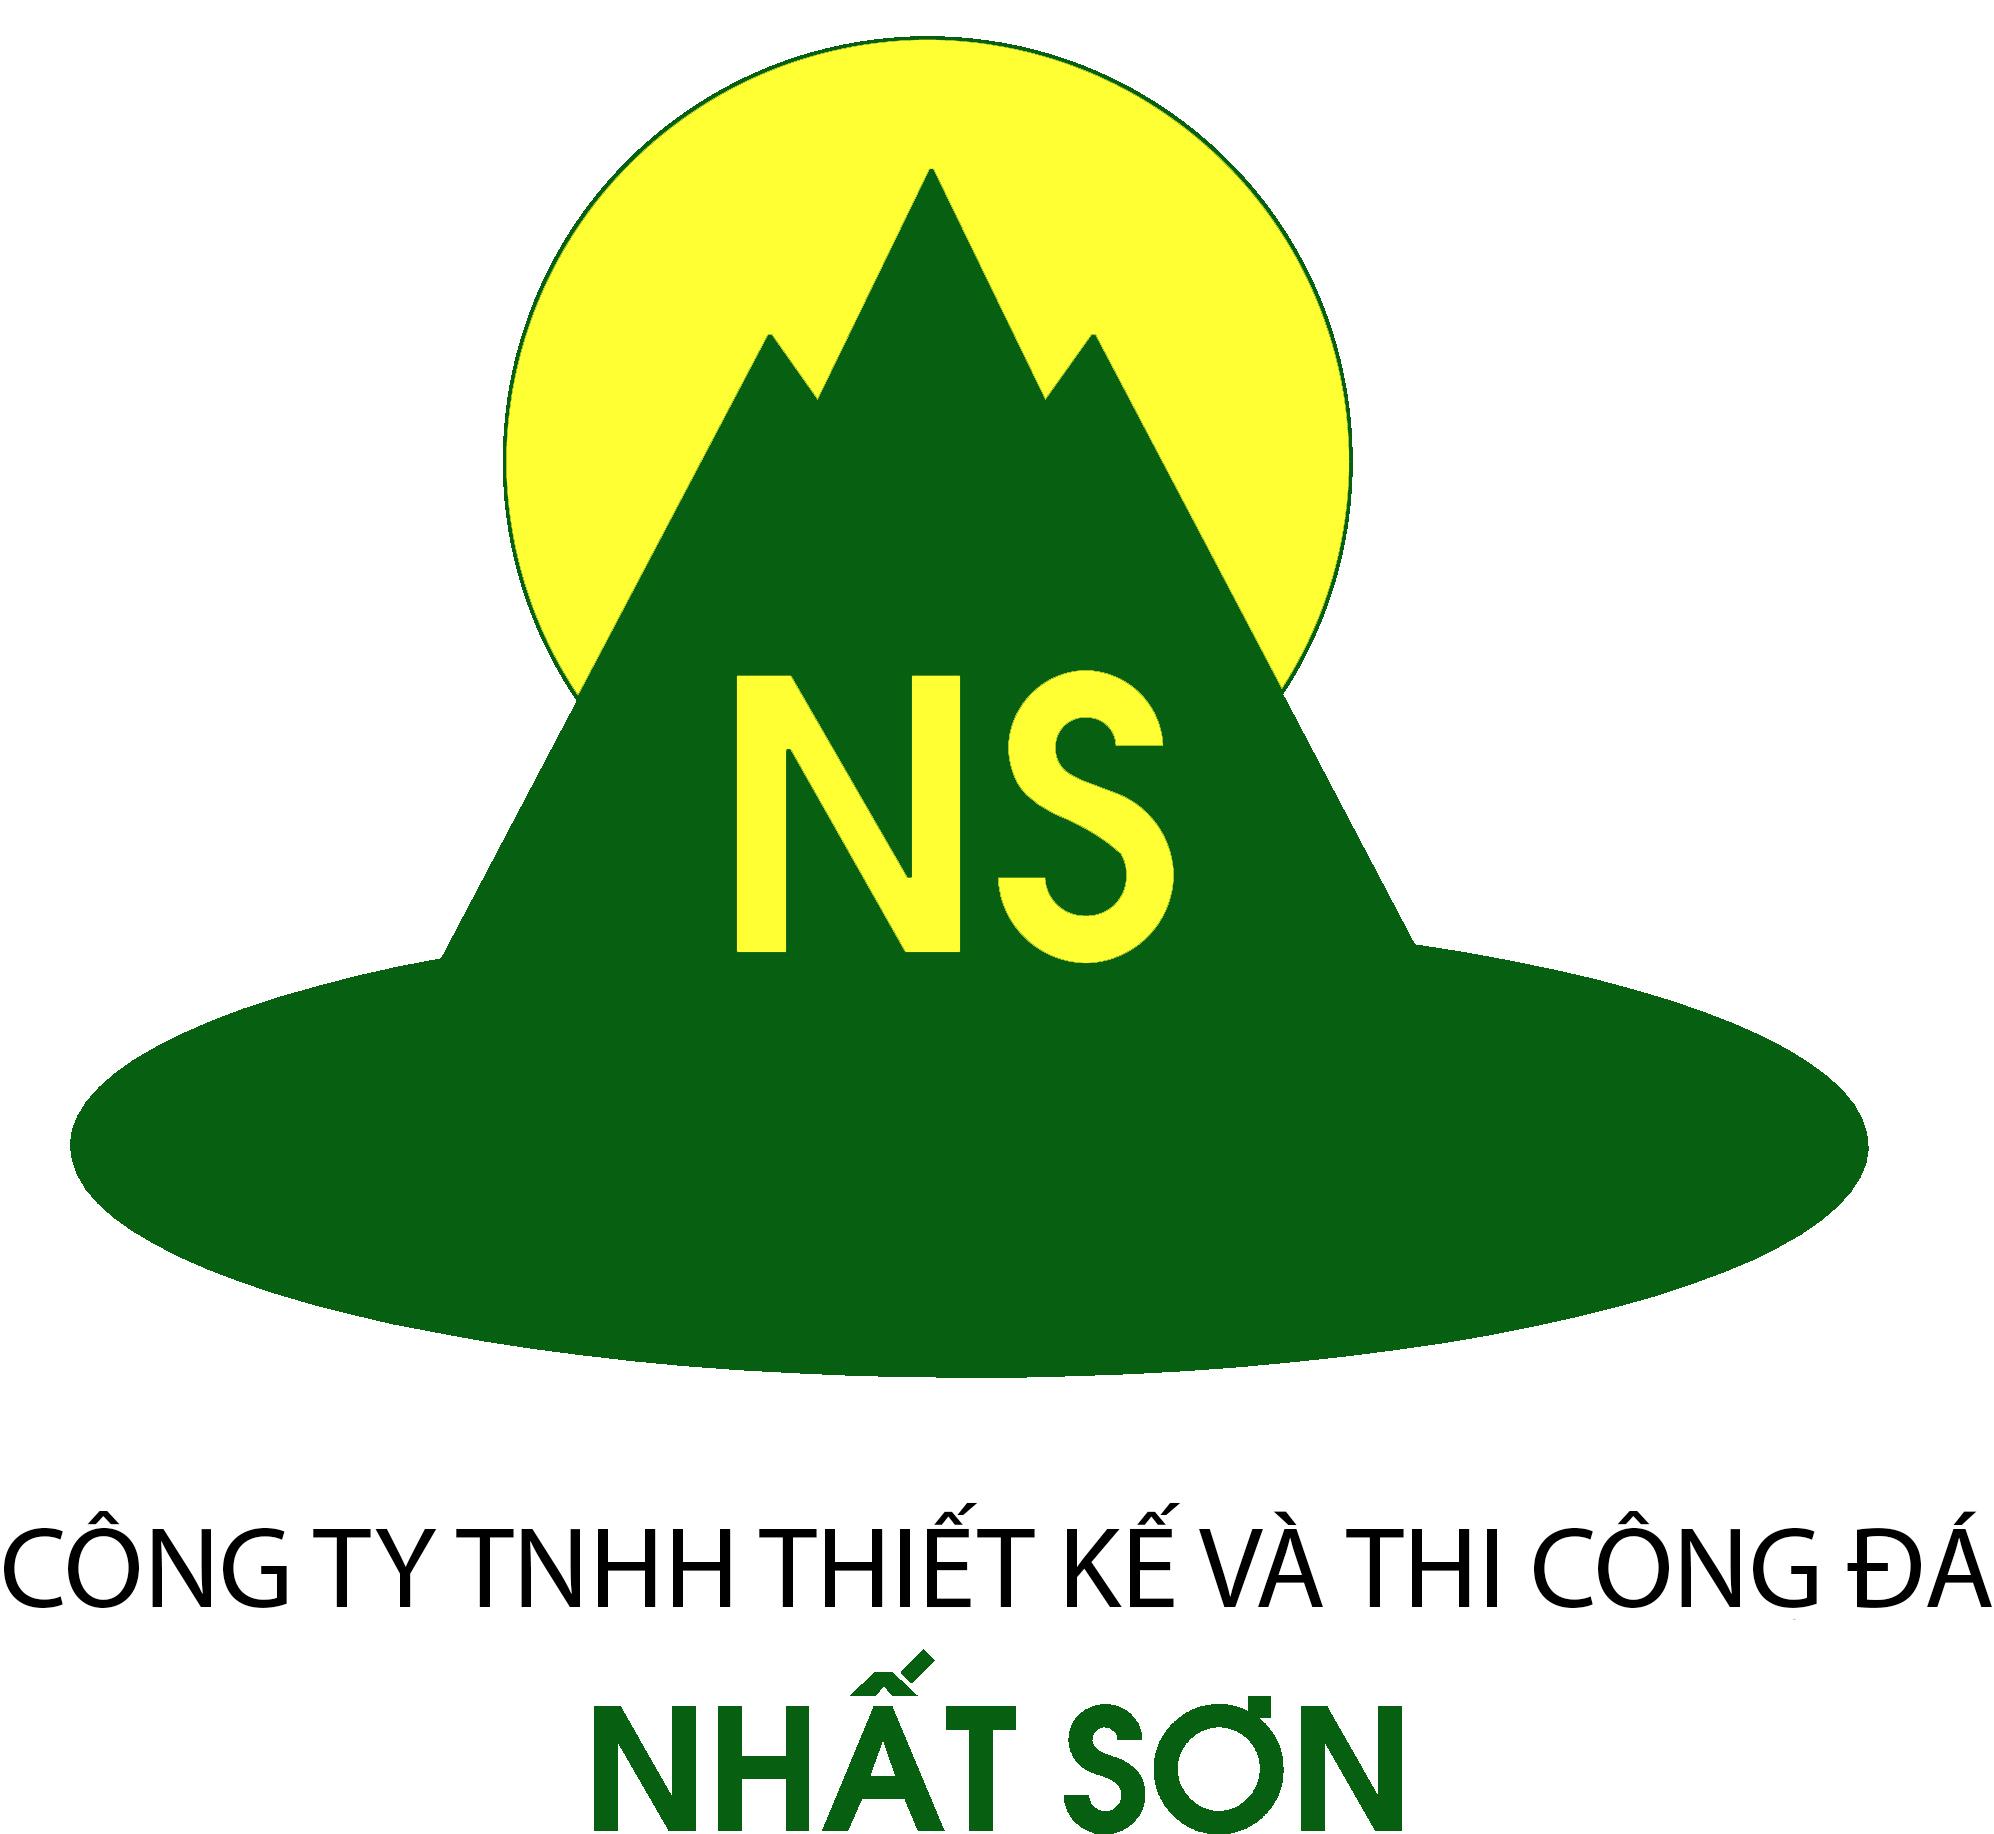 NHATSONSTONE COMPANY